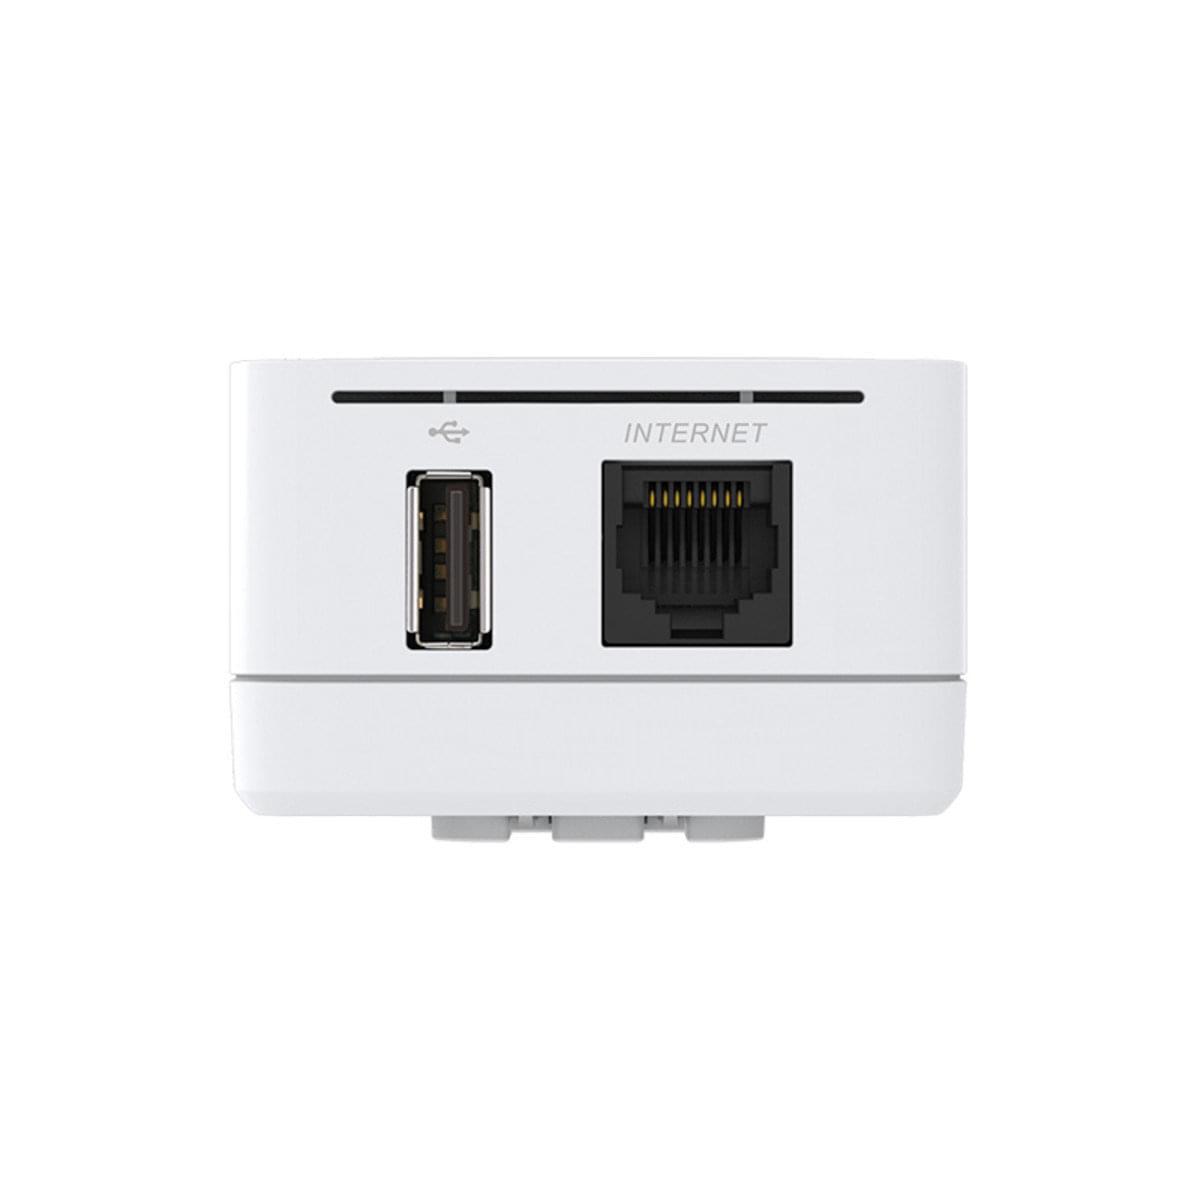 WiFi AC600 Router可攜式無線路由器，流動移動行動電源外置充電器，便攜充電器連路由器一體化設計無電線方便簡潔Router+Power Bank USB Charger(DIR-518L)